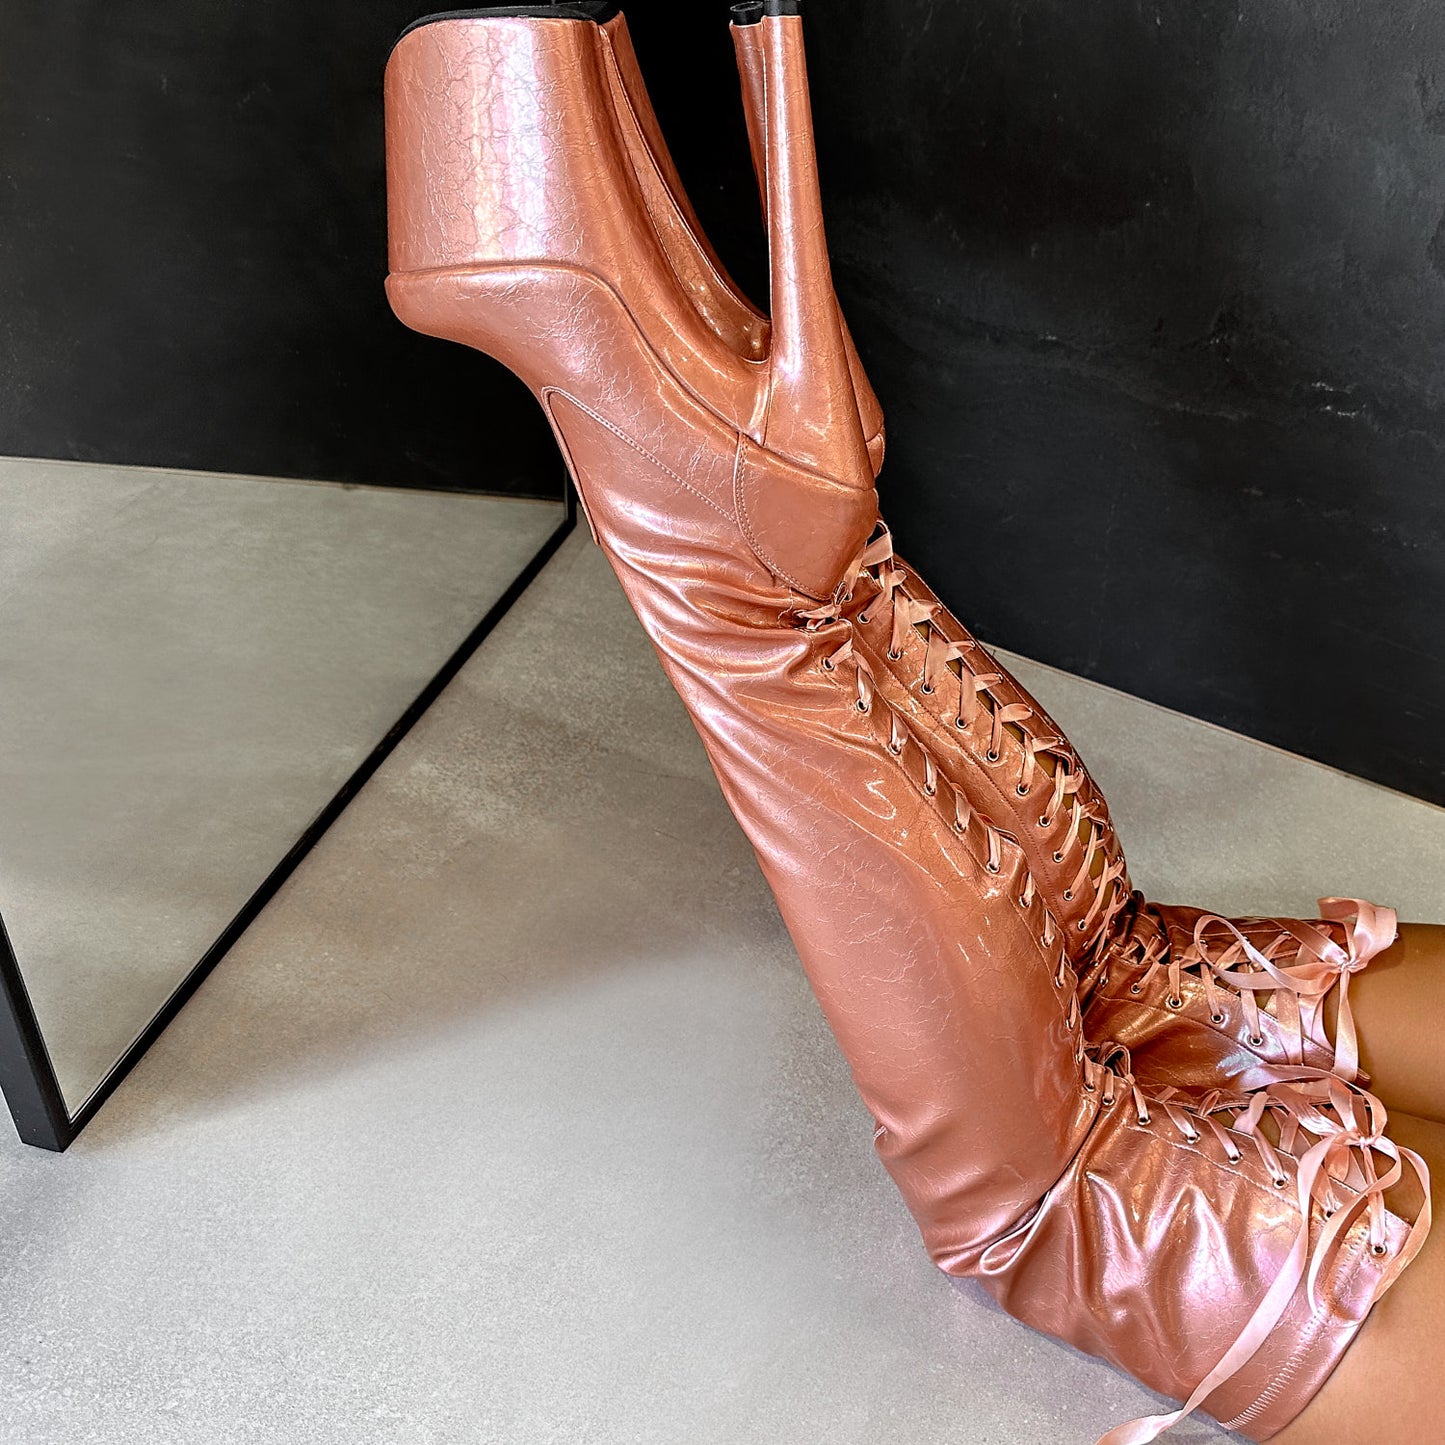 Heartbreaker - Rose Gold Thicc Thigh High - 8 INCH, stripper shoe, stripper heel, pole heel, not a pleaser, platform, dancer, pole dance, floor work